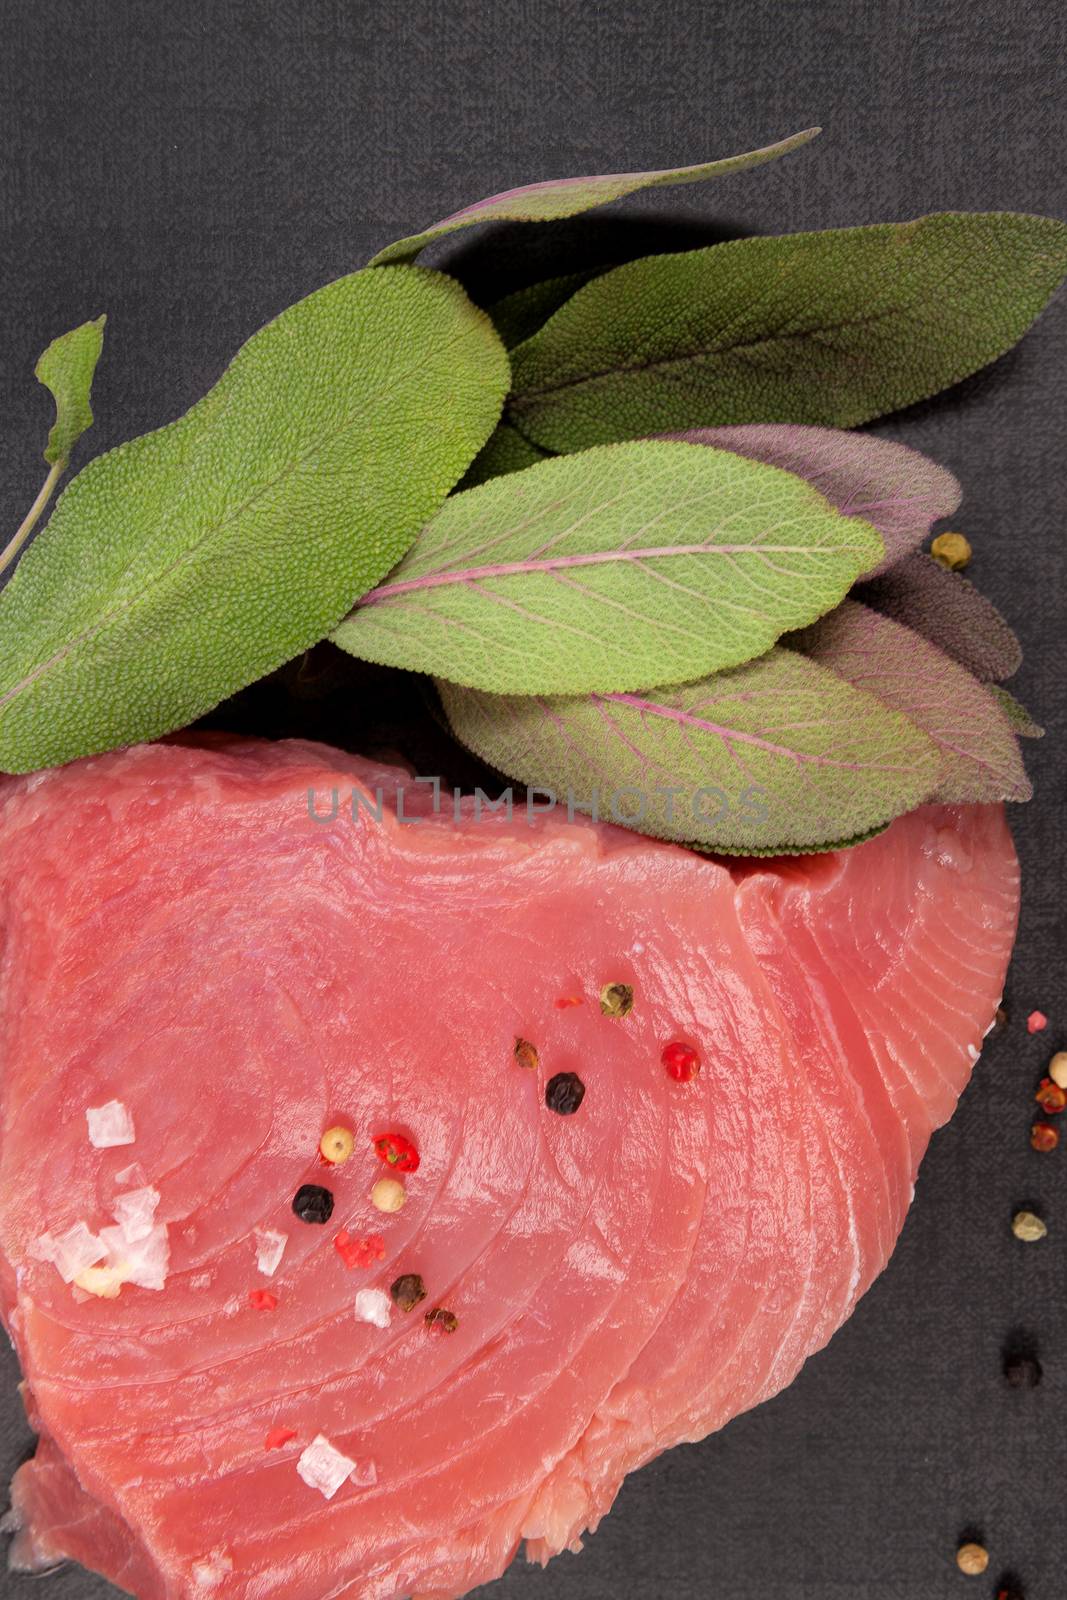 Raw fresh tuna steak with fresh sage herbs, peppercorns and salt on black background, top view.